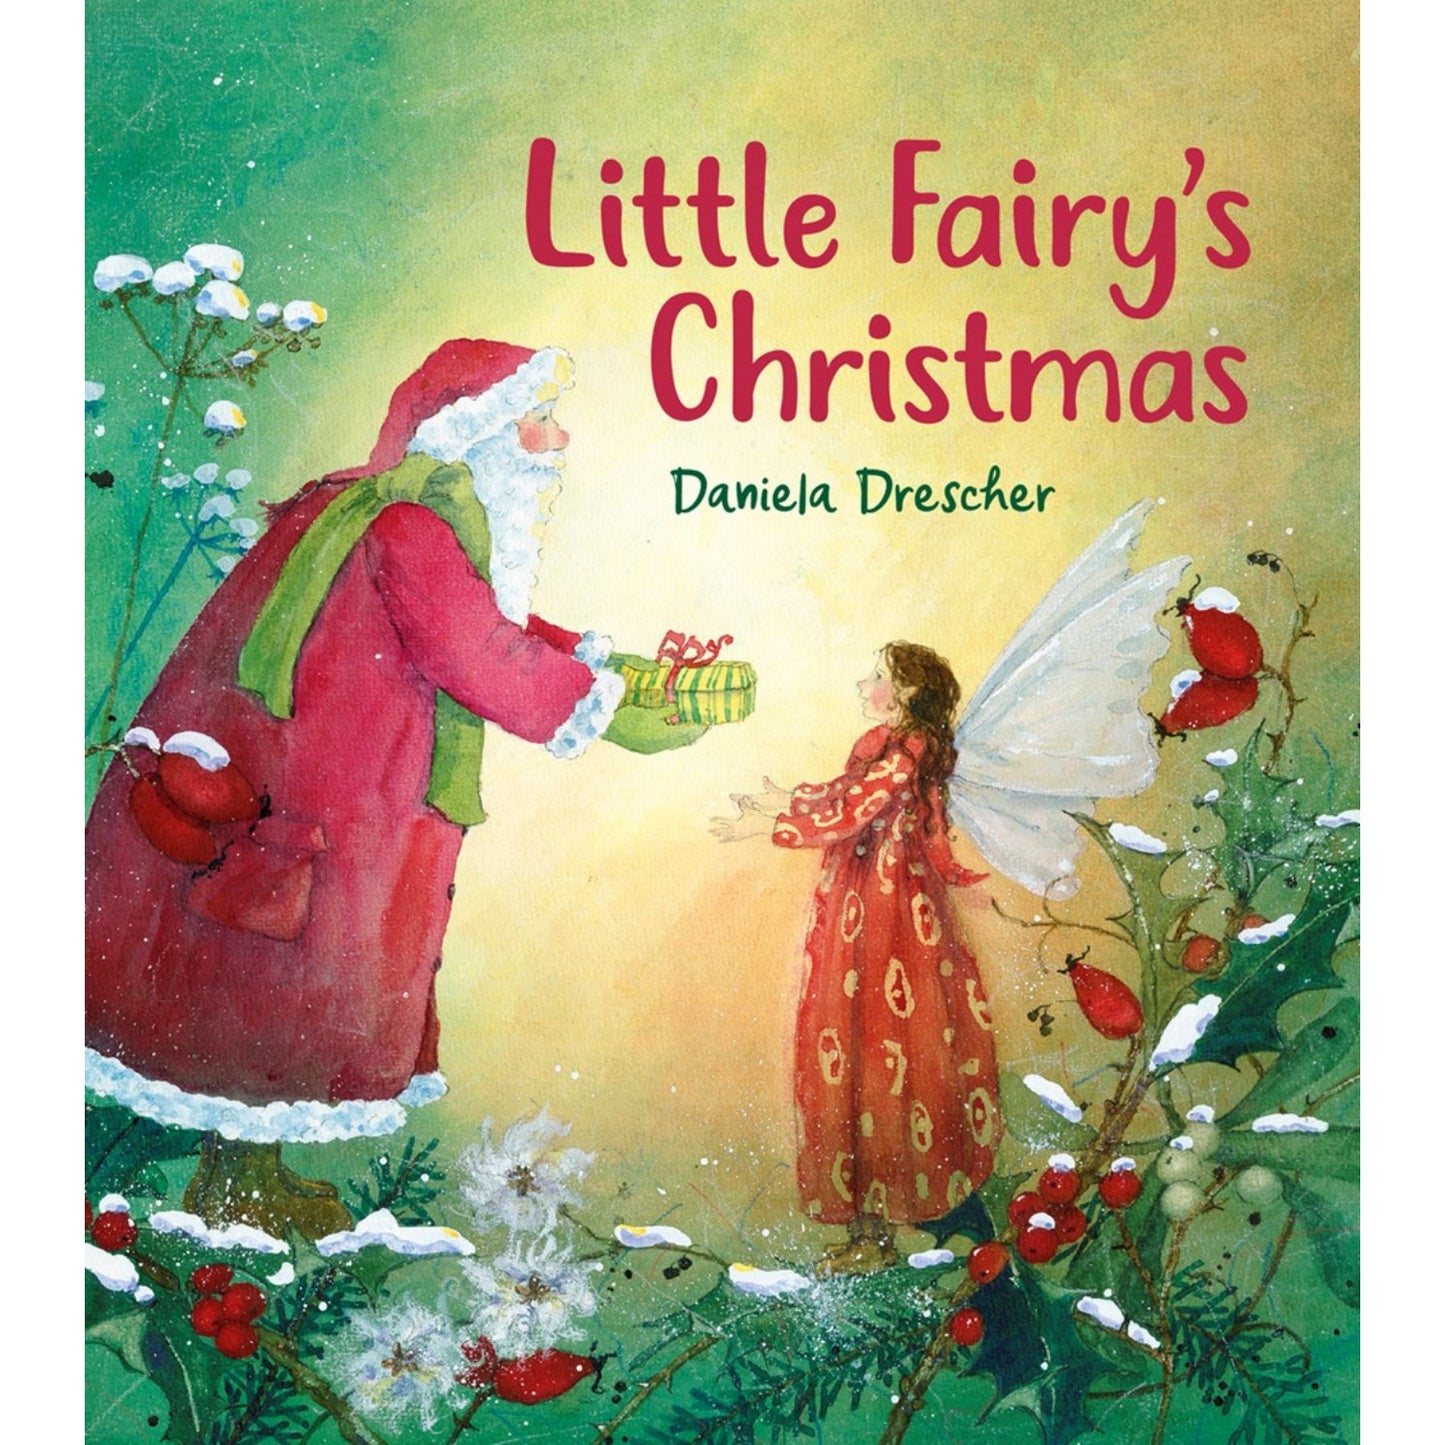 Little Fairy's Christmas | Daniela Drescher | Hardcover | Tales & Myths for Children